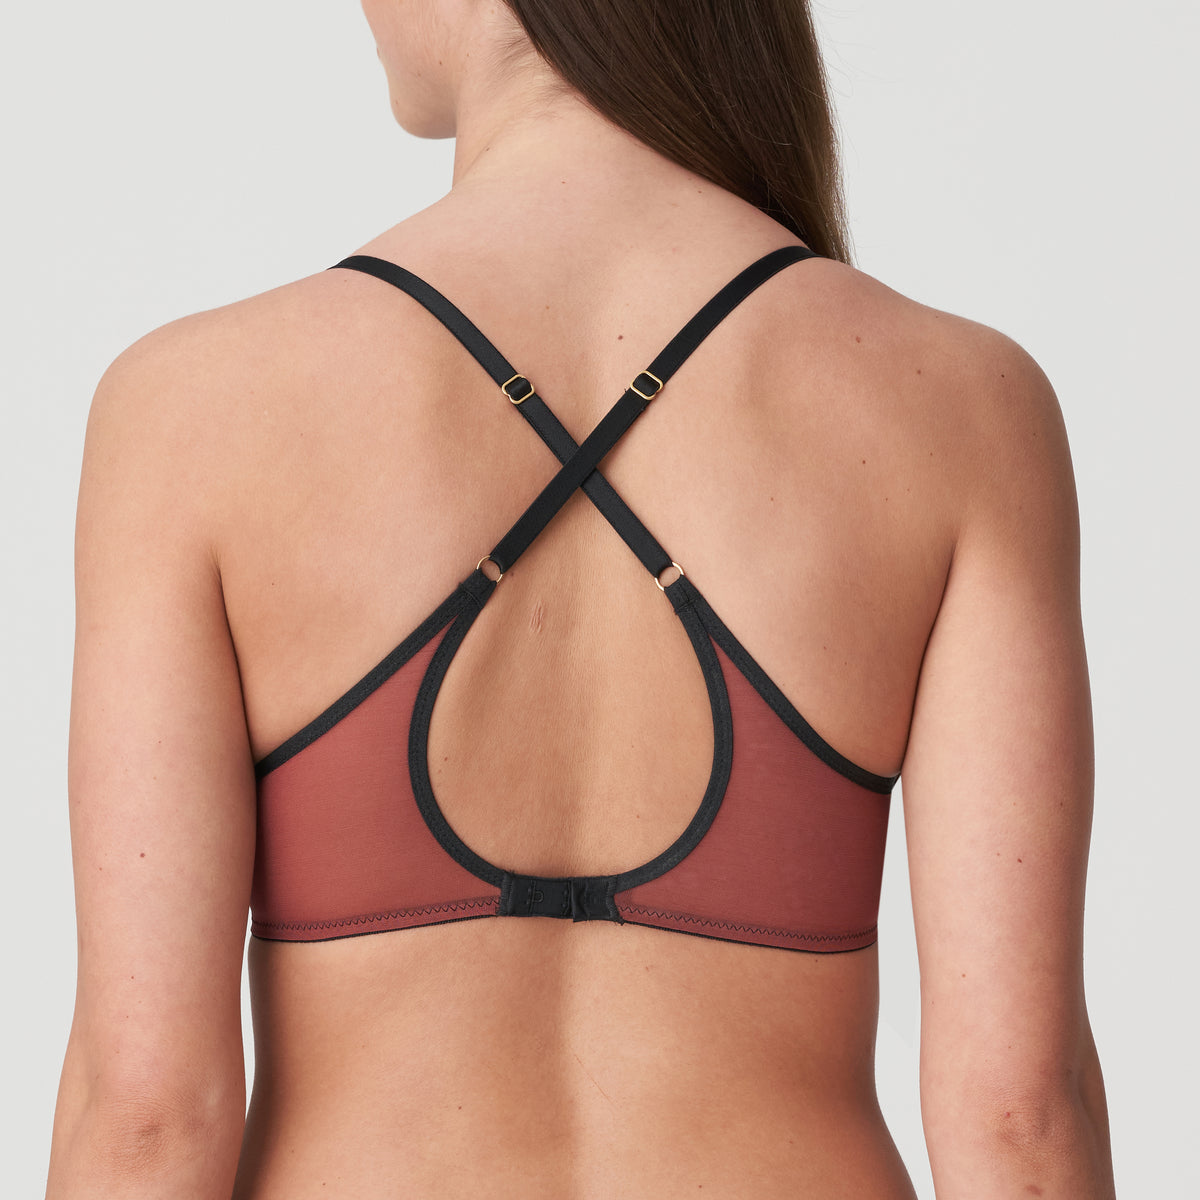 Reddish-brown Marie Jo push-up bra with black straps